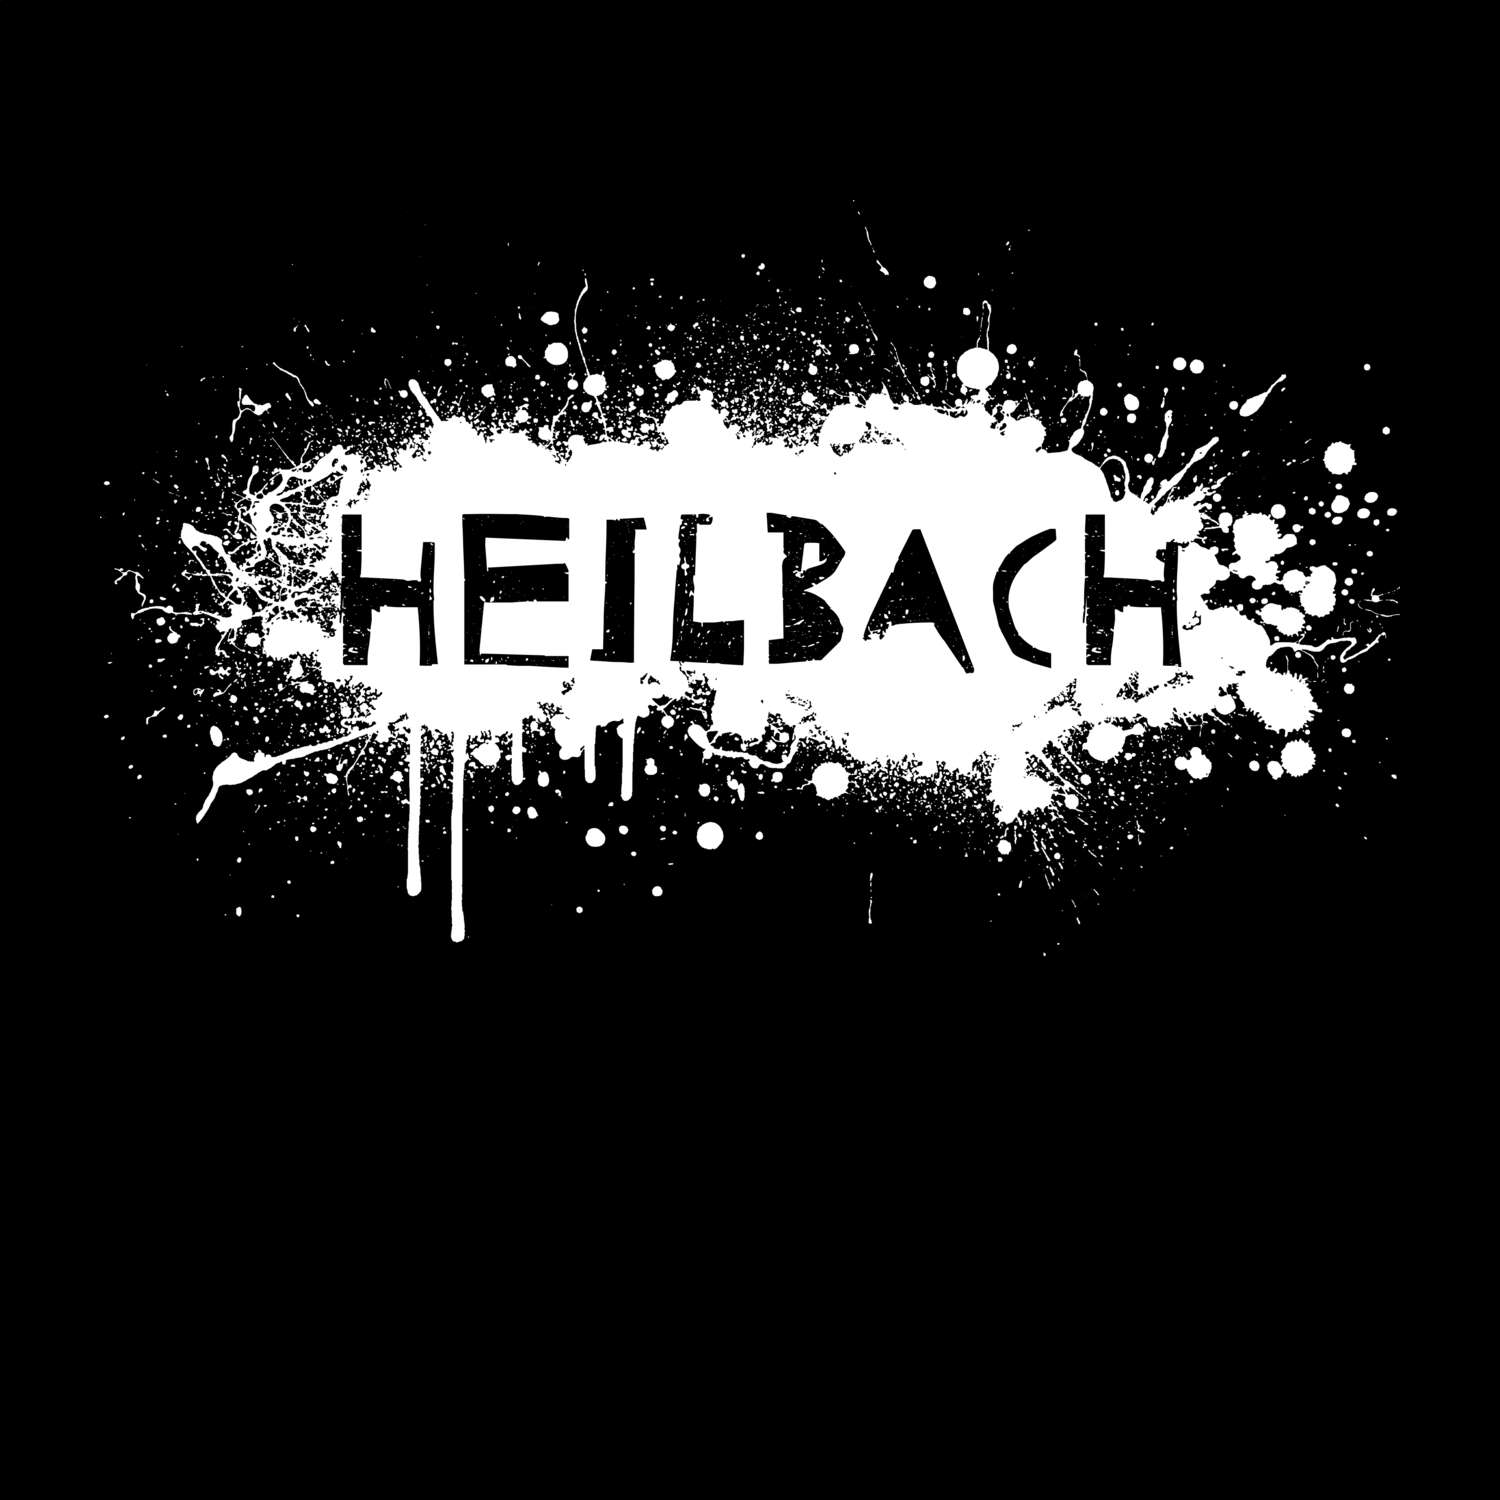 Heilbach T-Shirt »Paint Splash Punk«